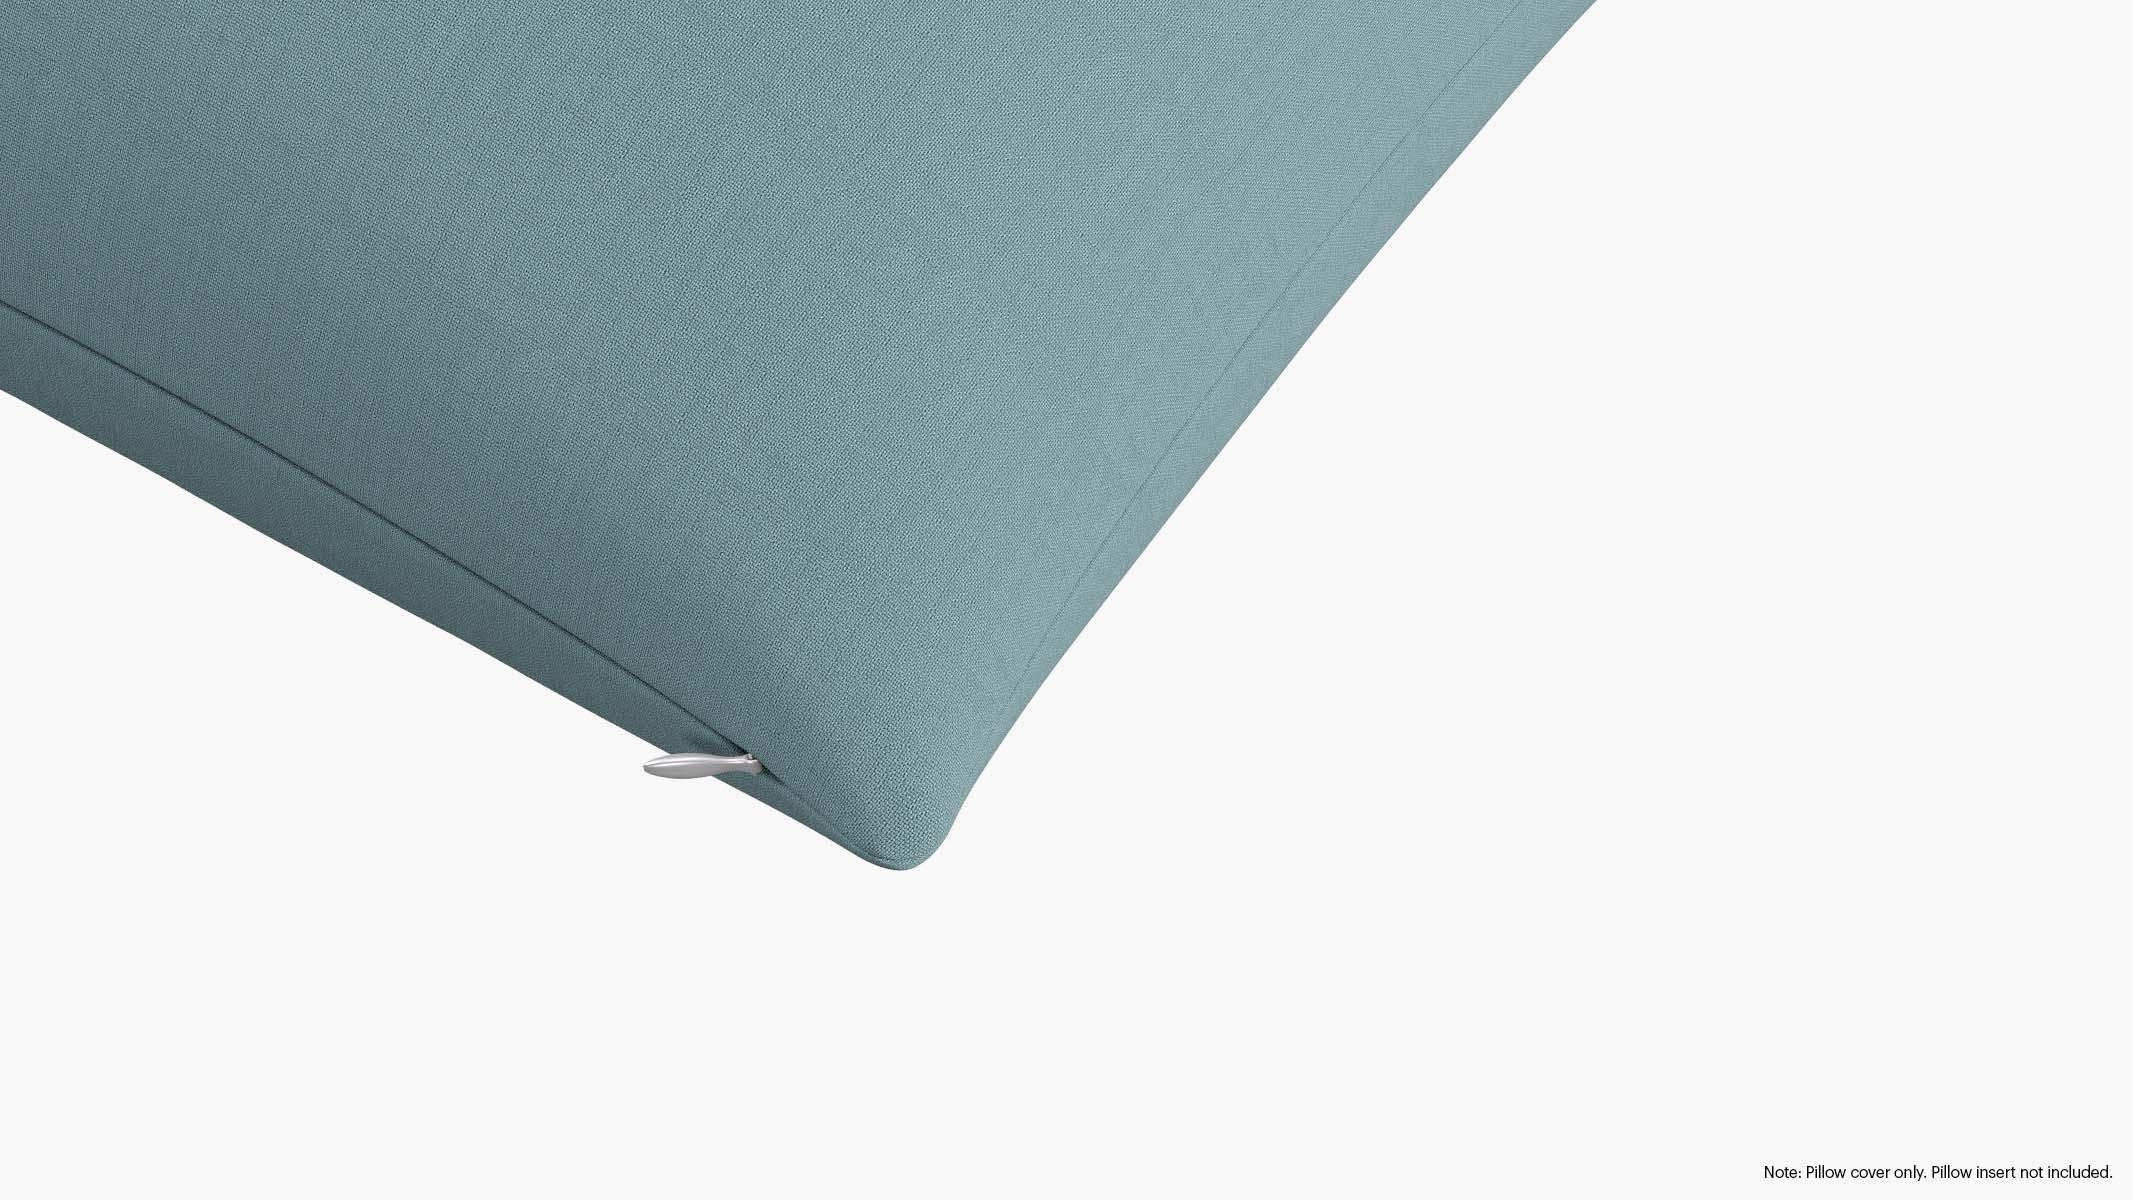 Throw Pillow Cover 26", Seaglass Everyday Linen, 26" x 26" - Image 1